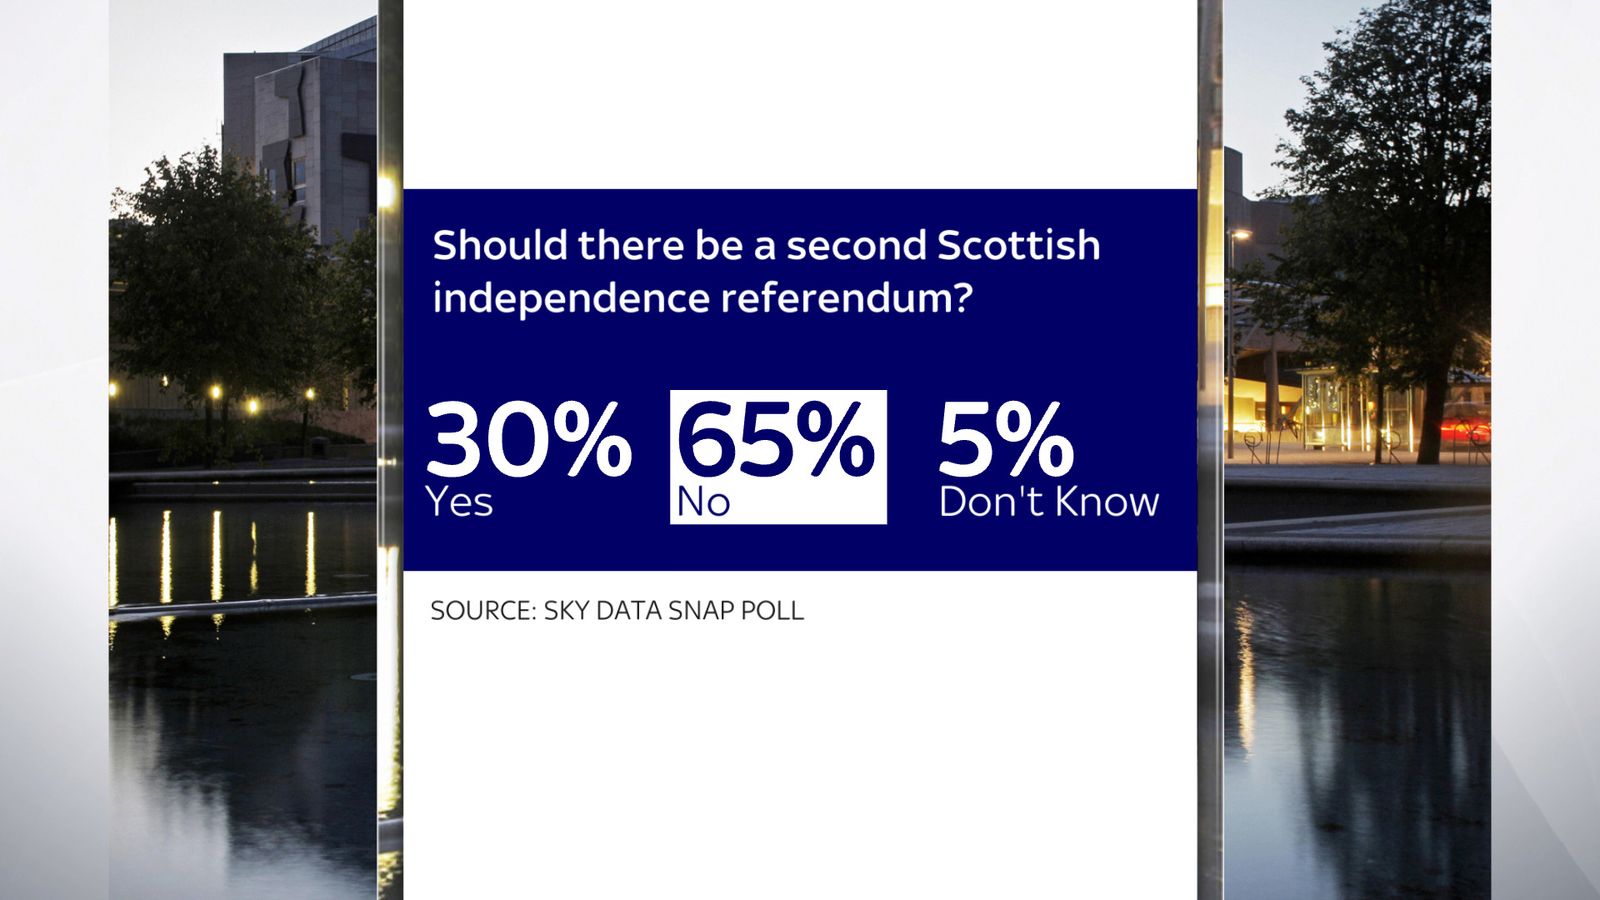 British public opposes second Scottish referendum - Sky Data poll | Politics News ...1600 x 900